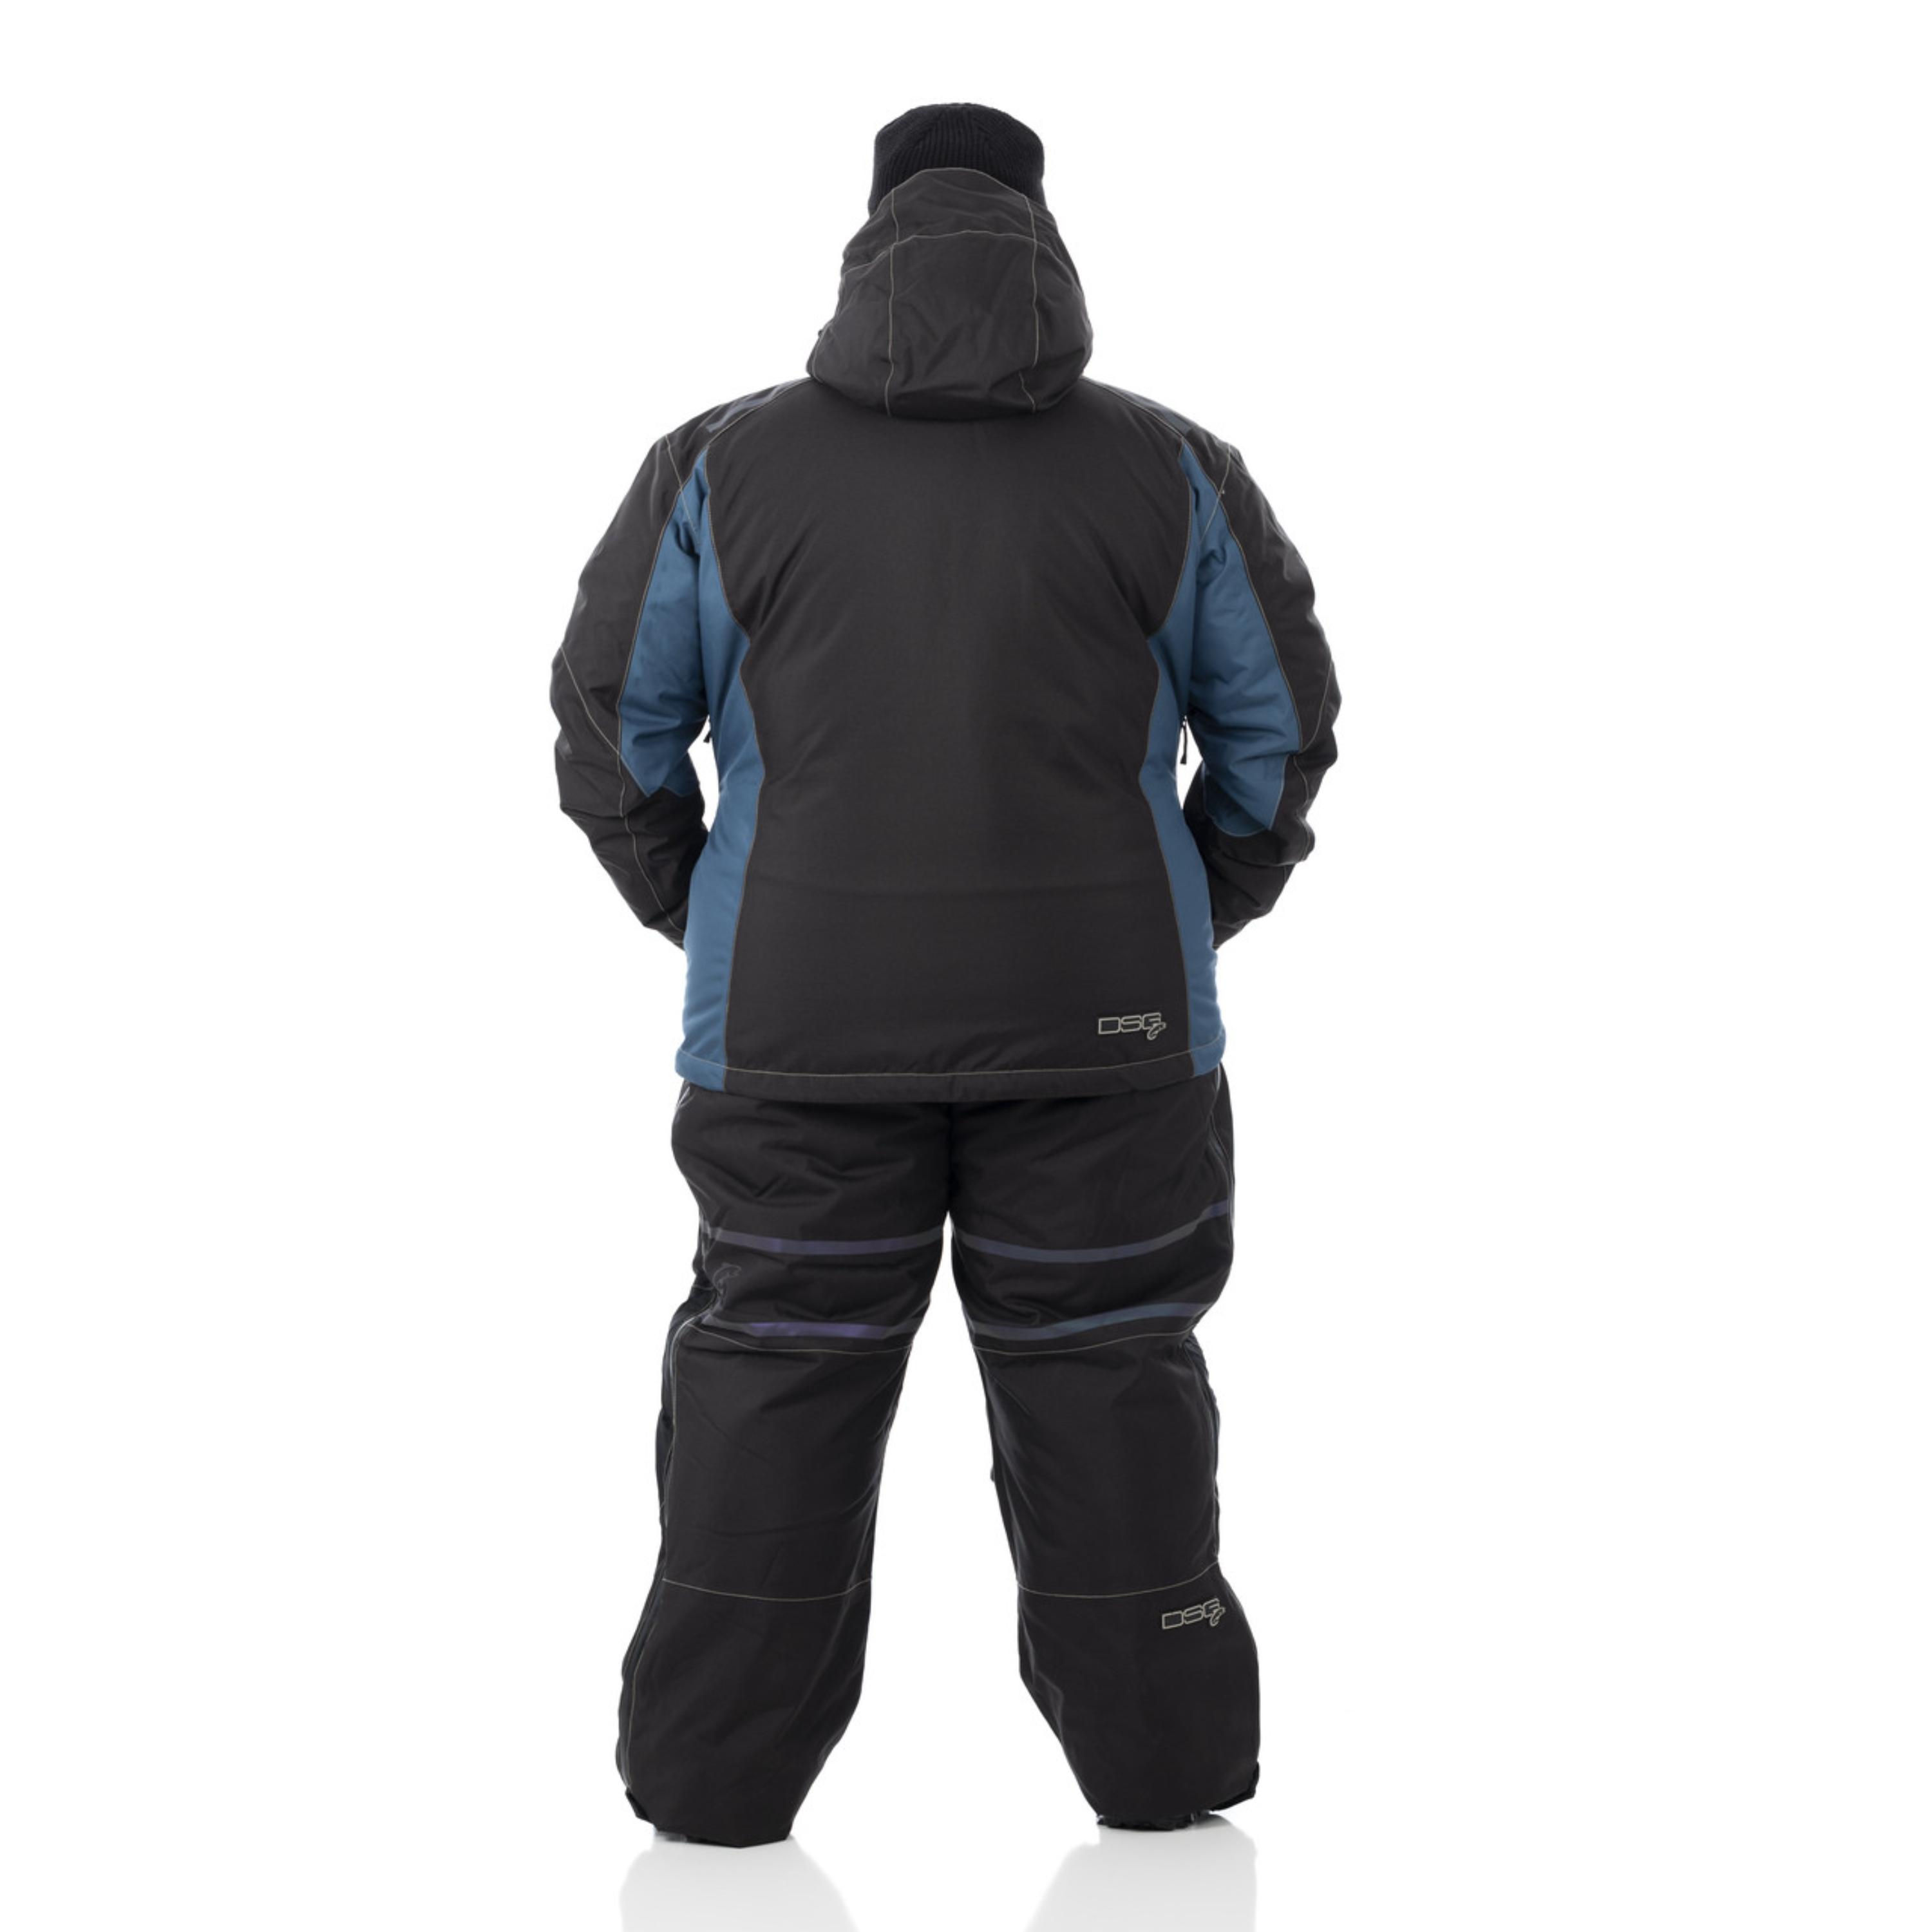 DSG Outerwear Avid 2.0 Ice Jacket - Realtree Aspect Glacier LG